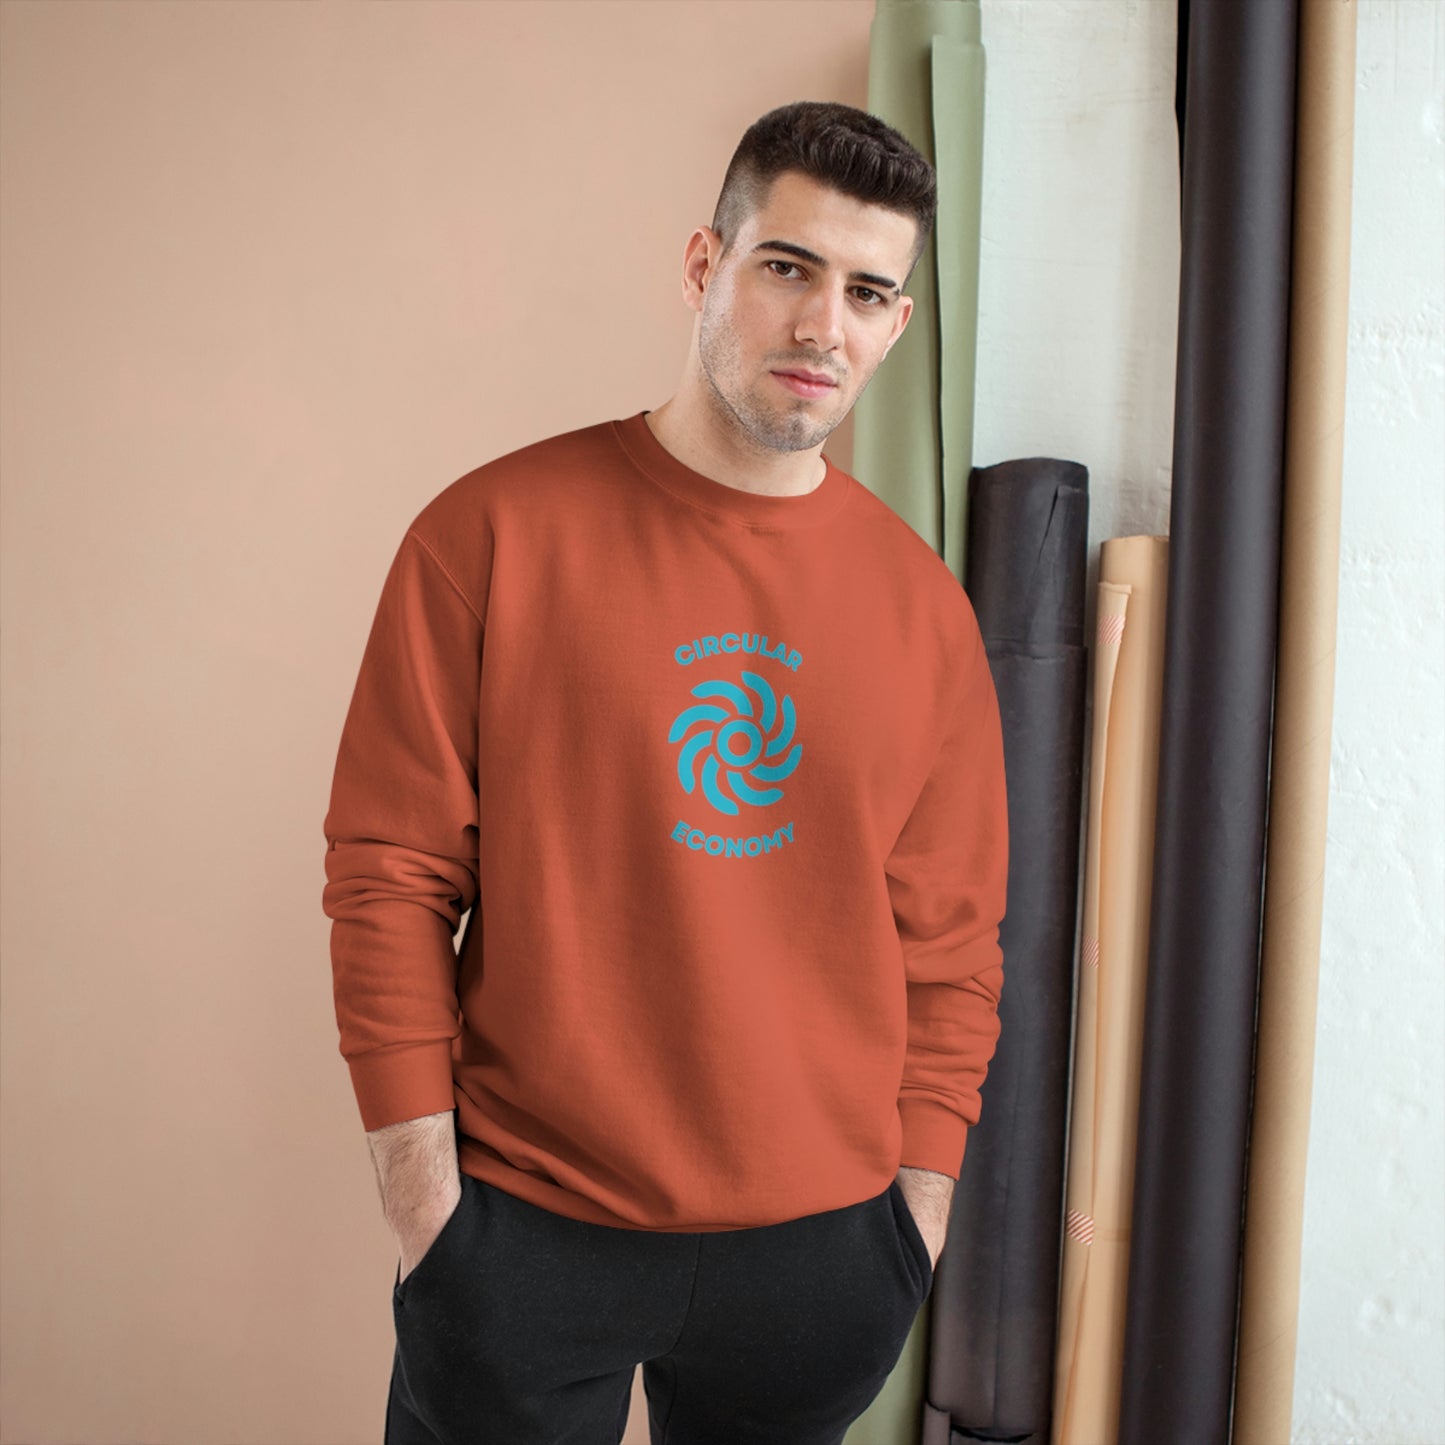 Champion Sweatshirt - CIRCULAR ECONOMY